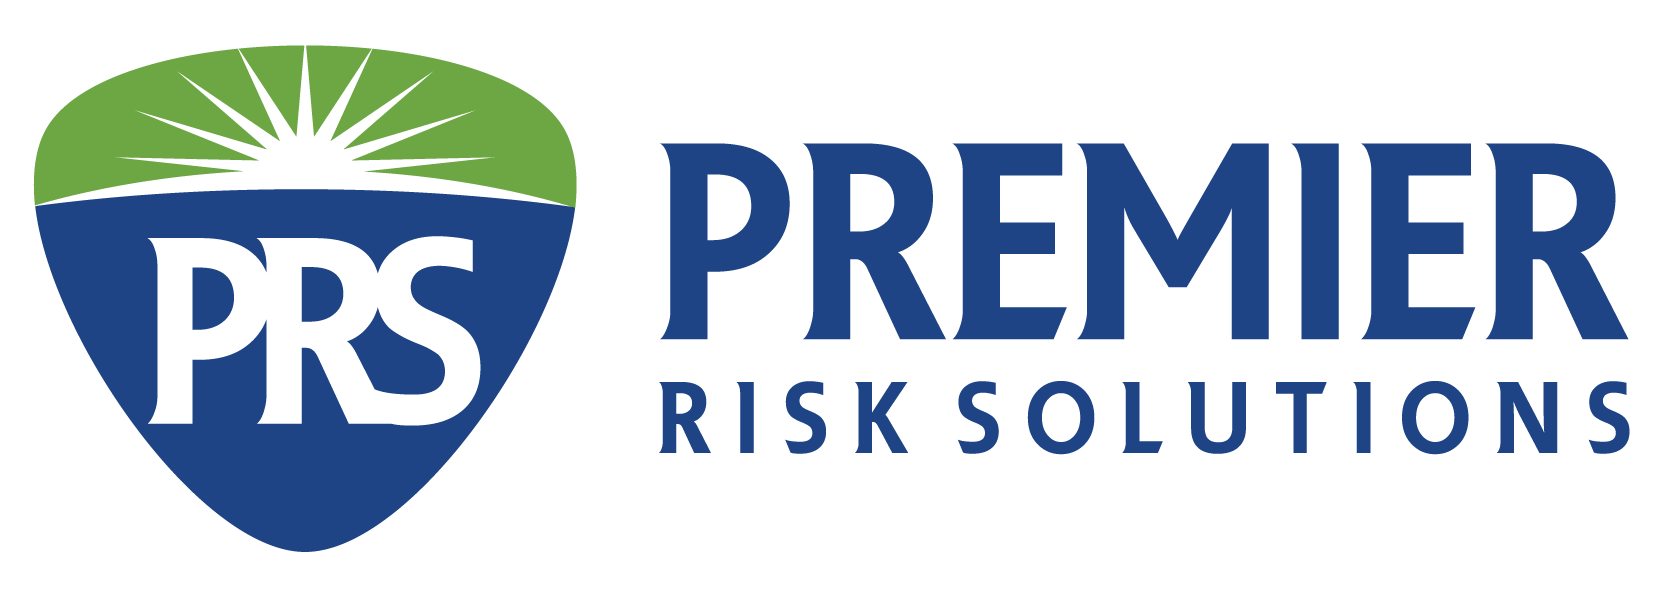 Premier Risk Solutions Logo